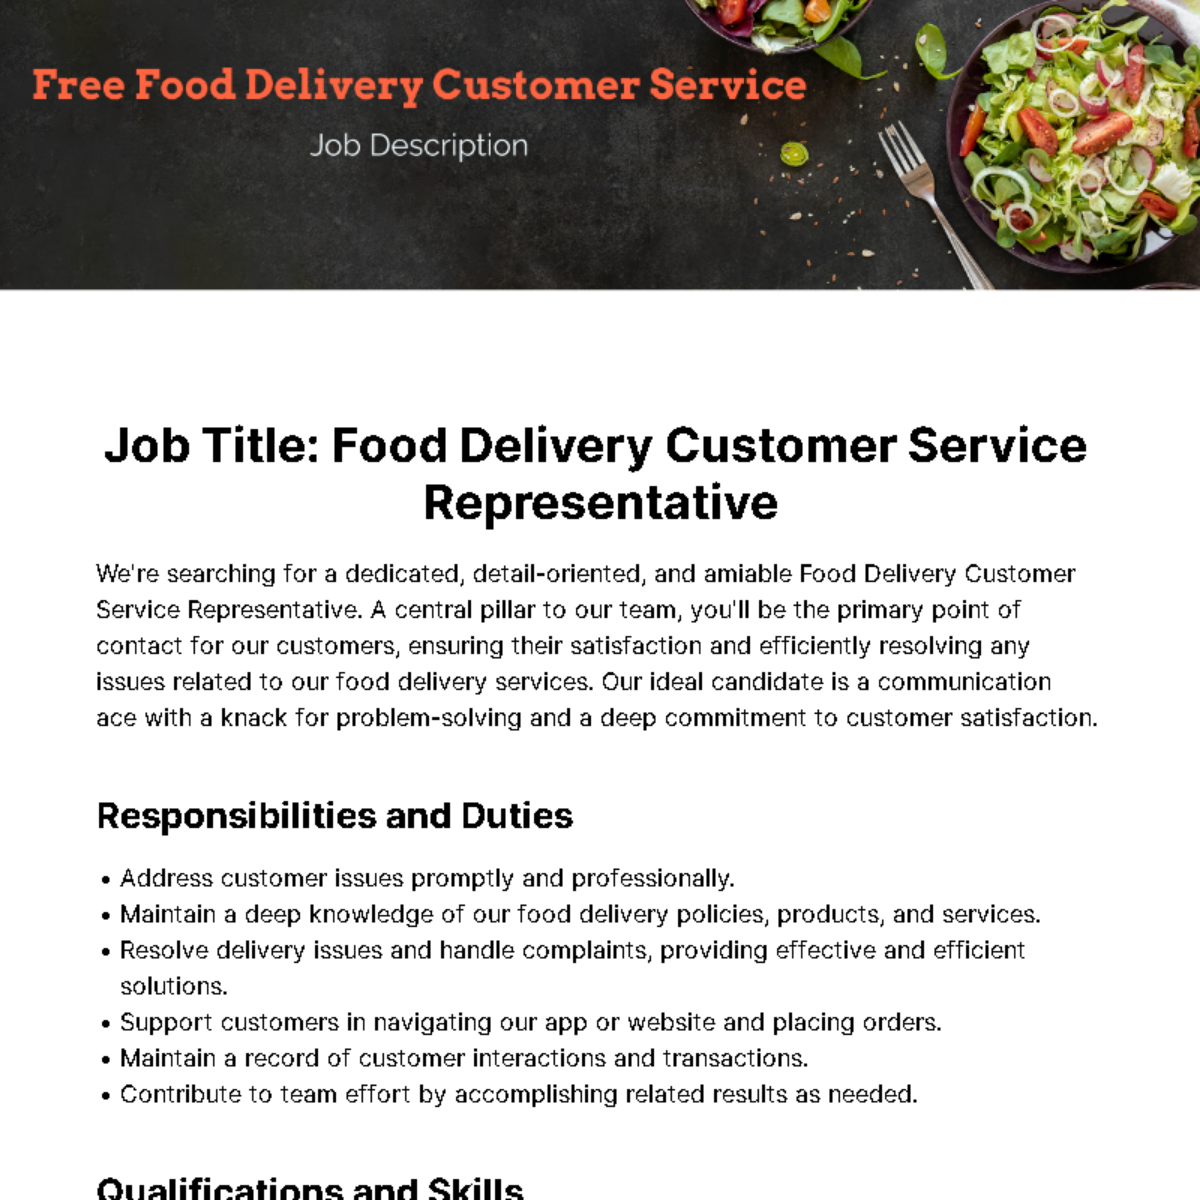 Food Delivery Customer Service Job Description Template